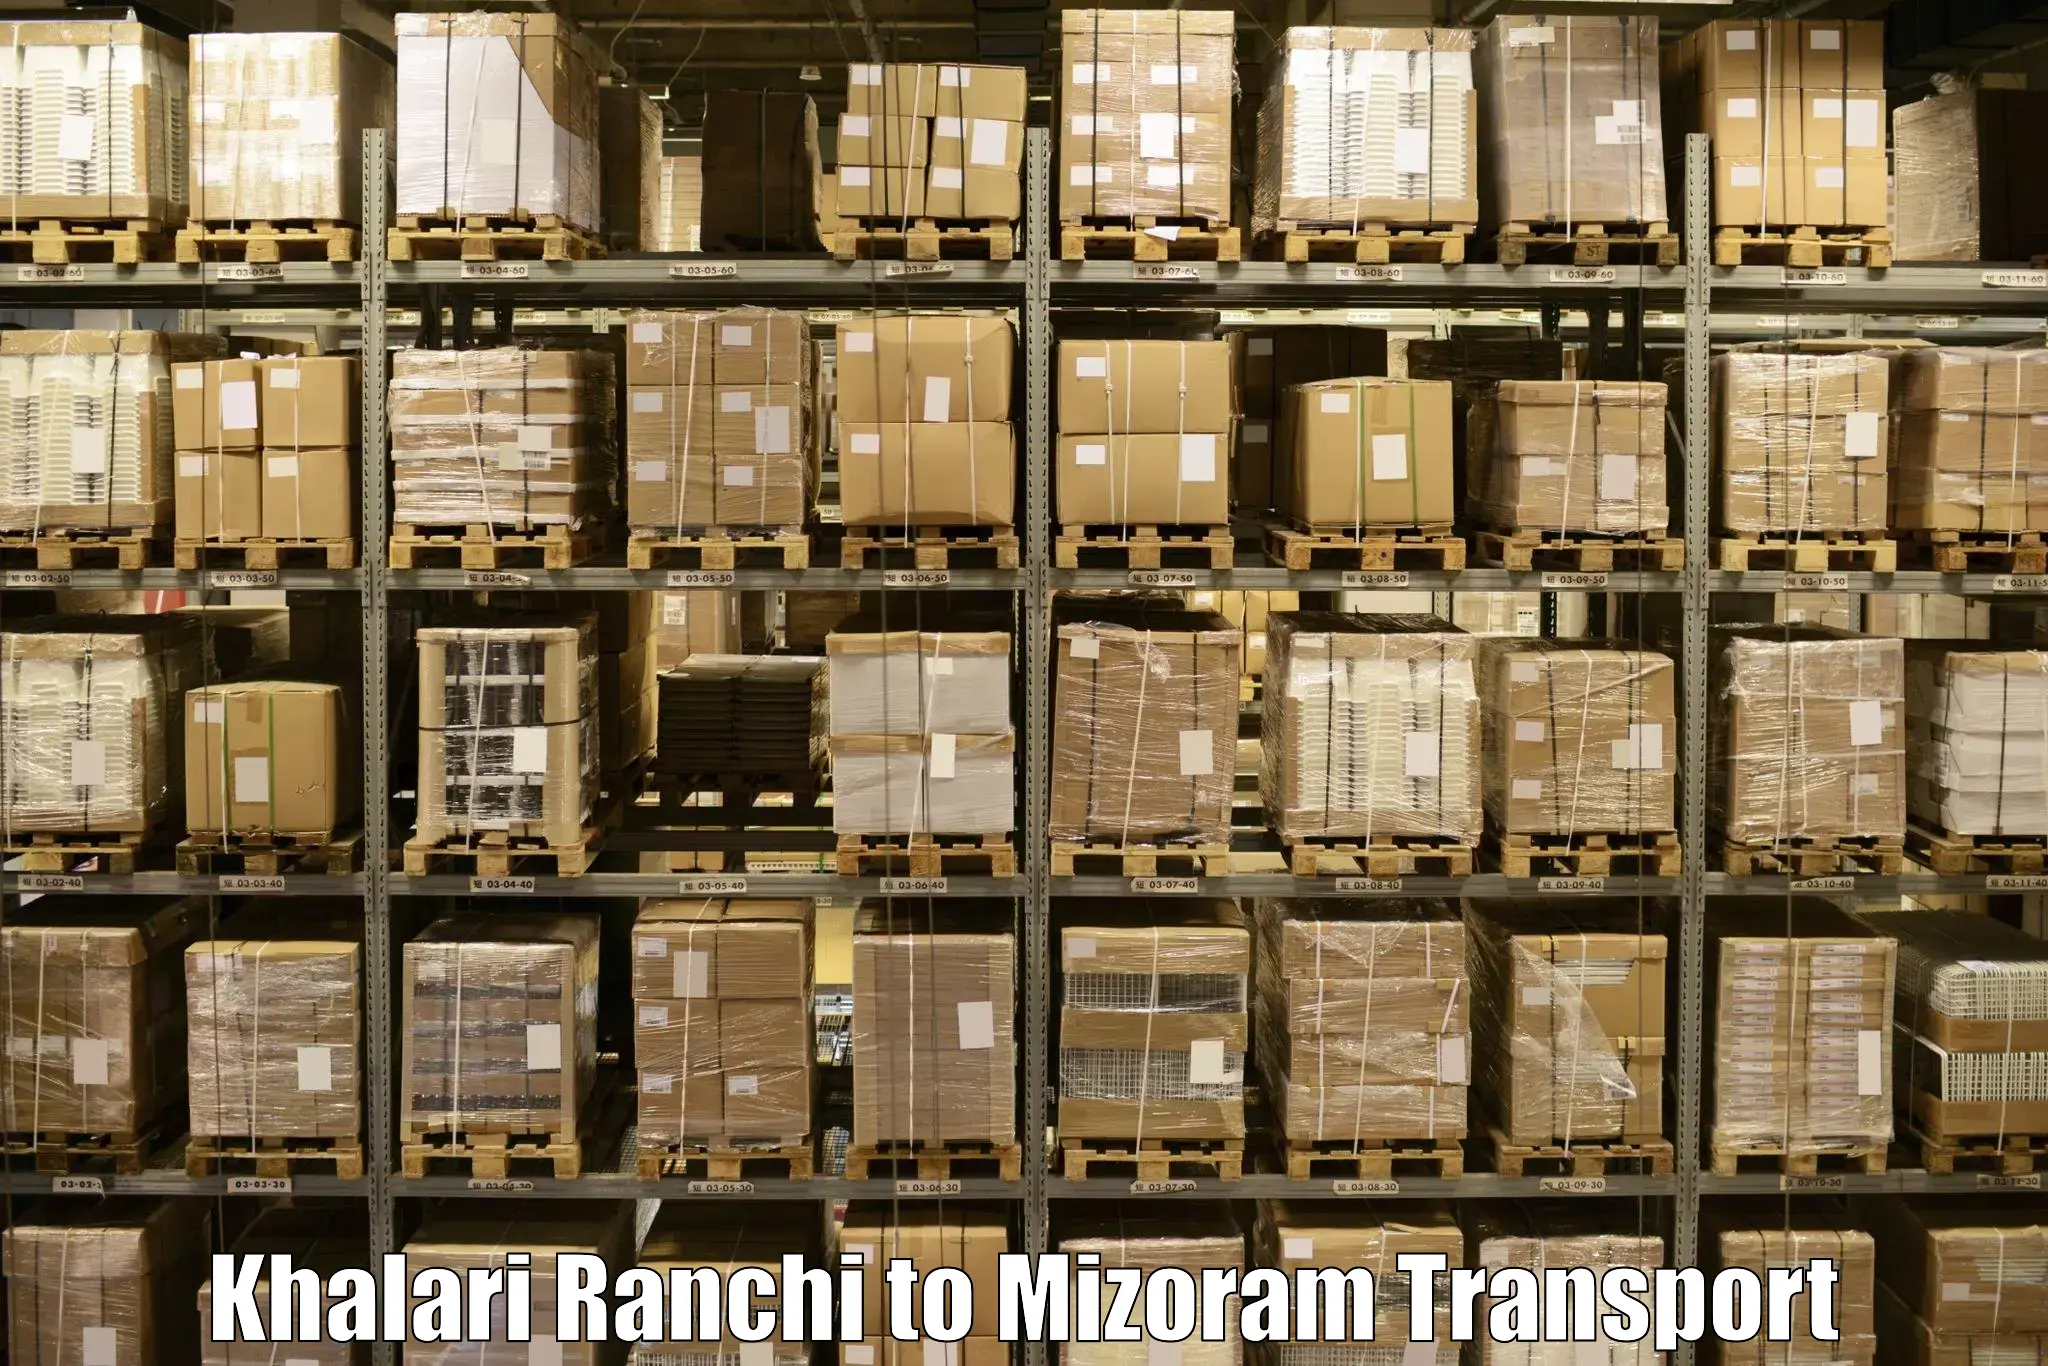 Commercial transport service Khalari Ranchi to Thenzawl